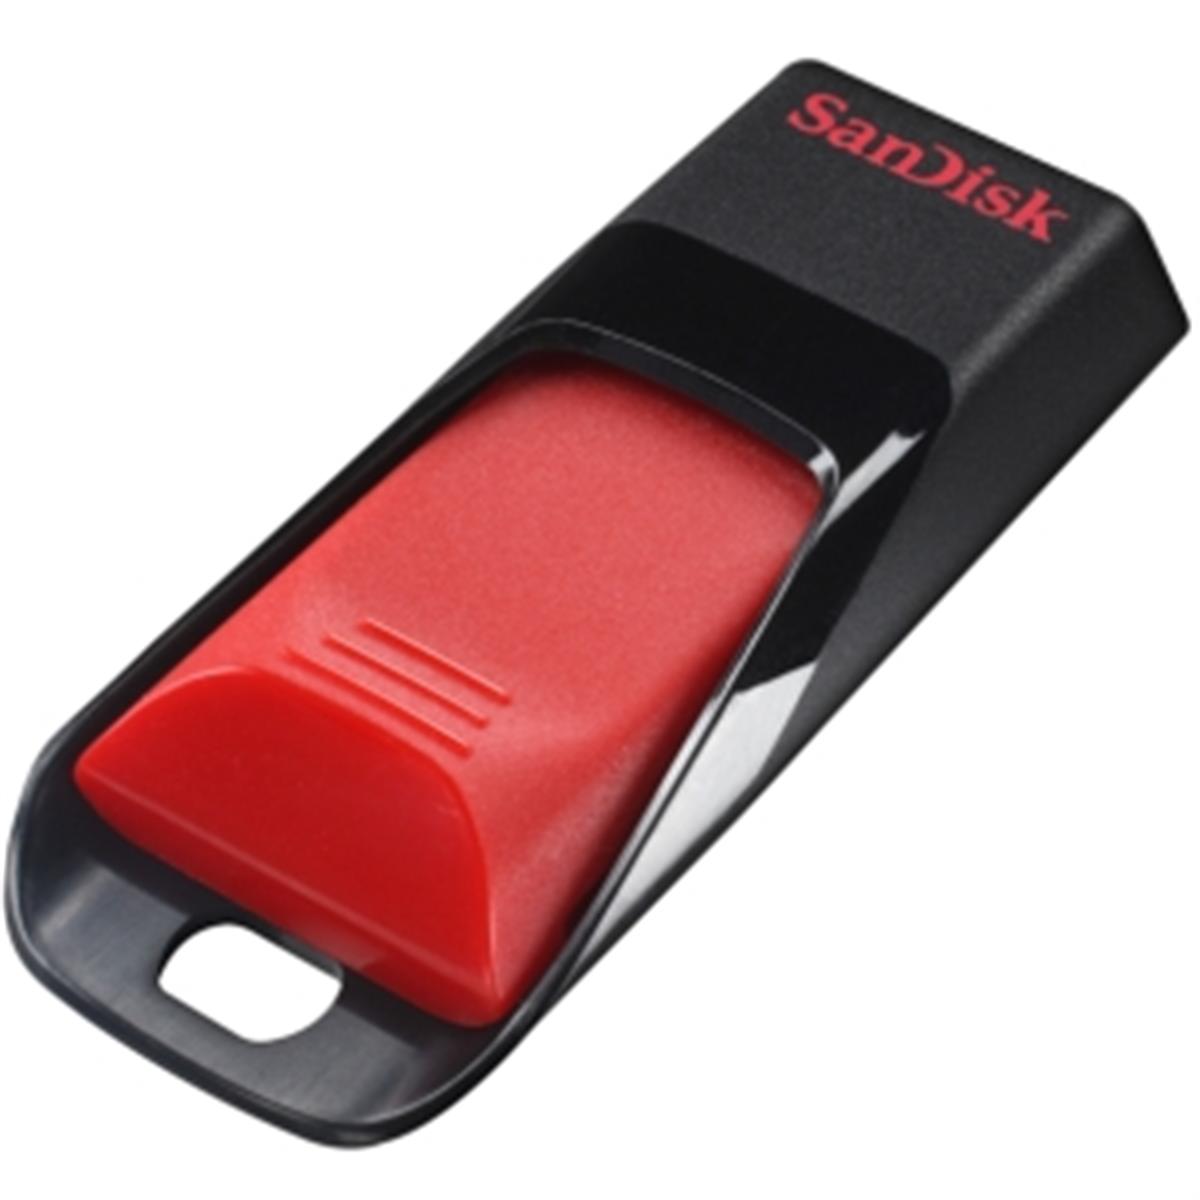  Memorie USB SanDisk Cruzer Edge SDCZ51, 8GB, USB 2.0, Negru/Rosu 